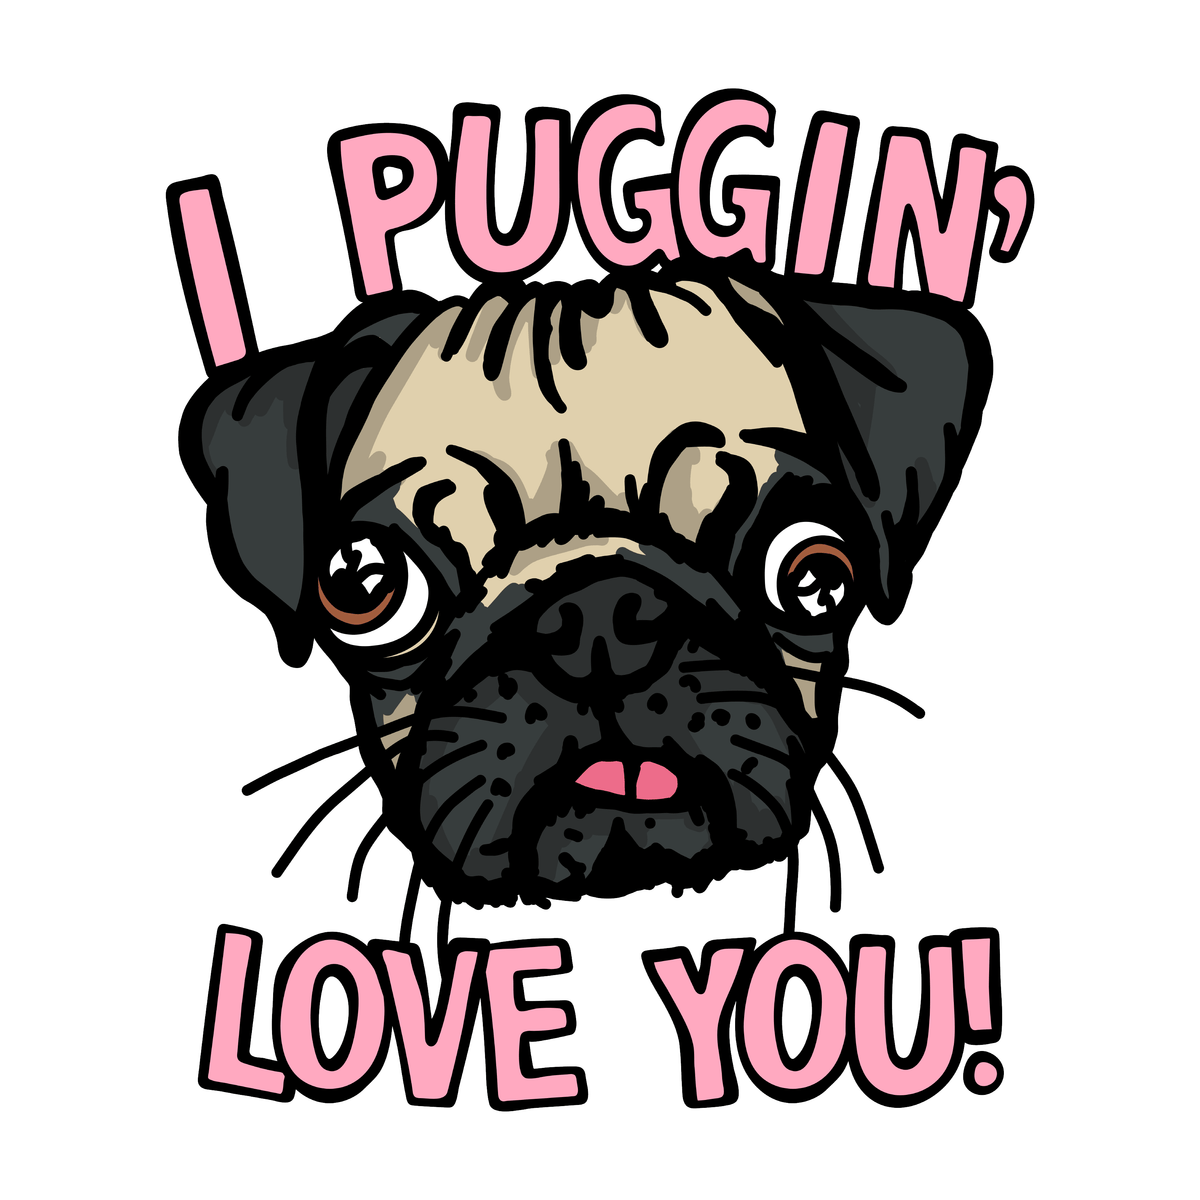 Puggin Love you 🐶❣️ - Coffee Mug